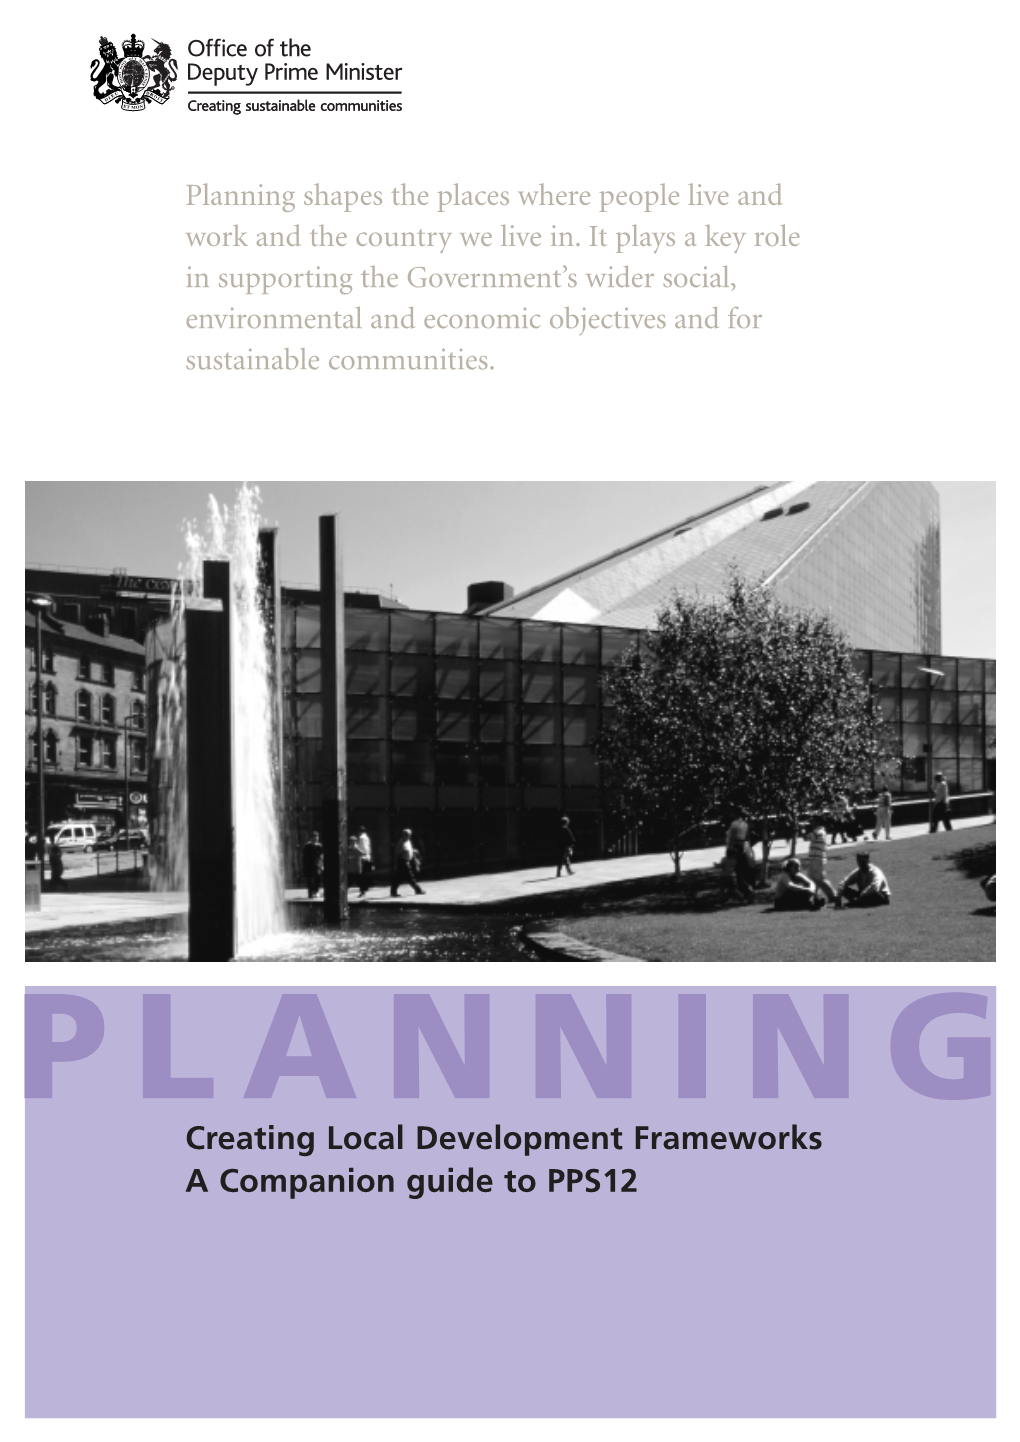 Creating Local Development Frameworks